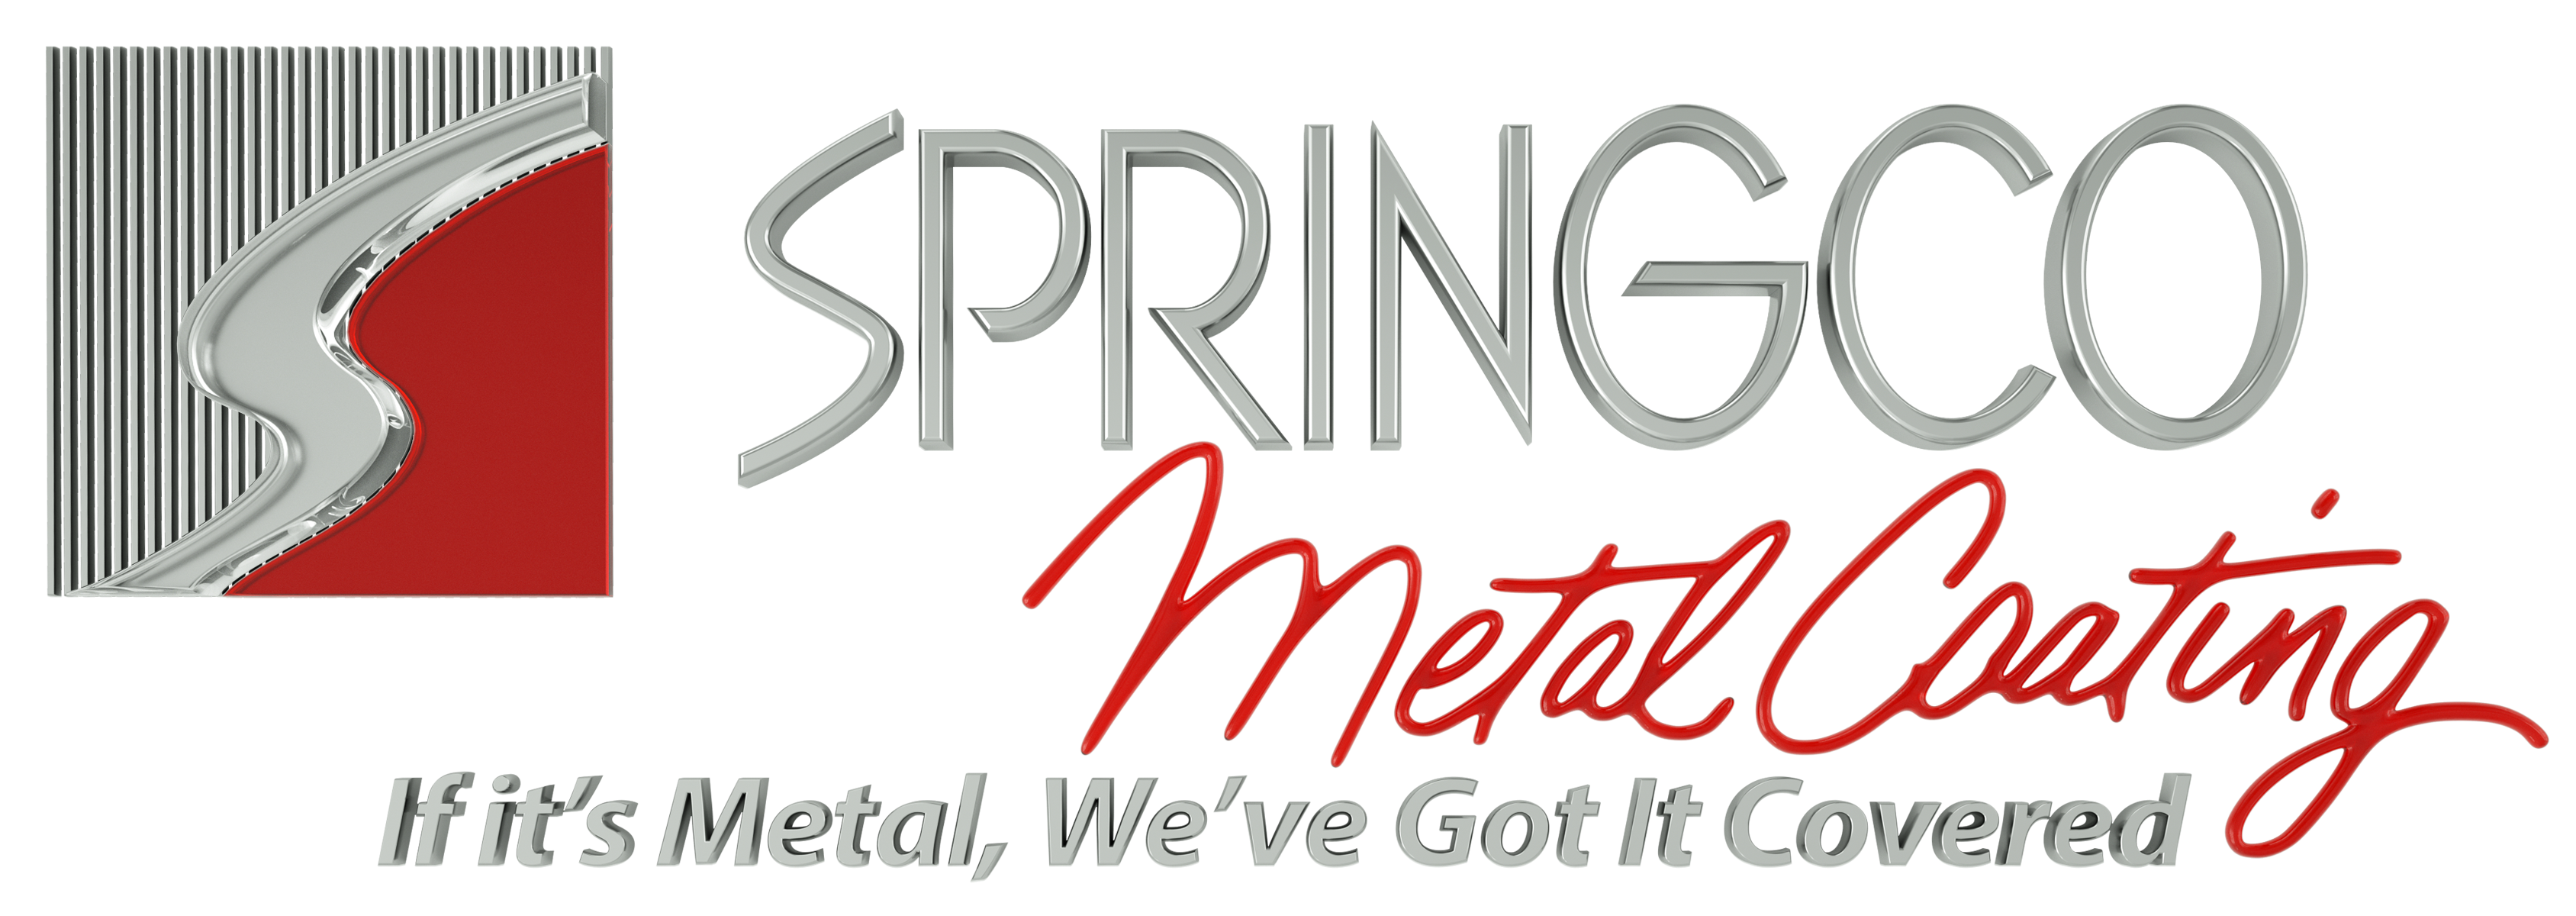 Springco Metal Coating